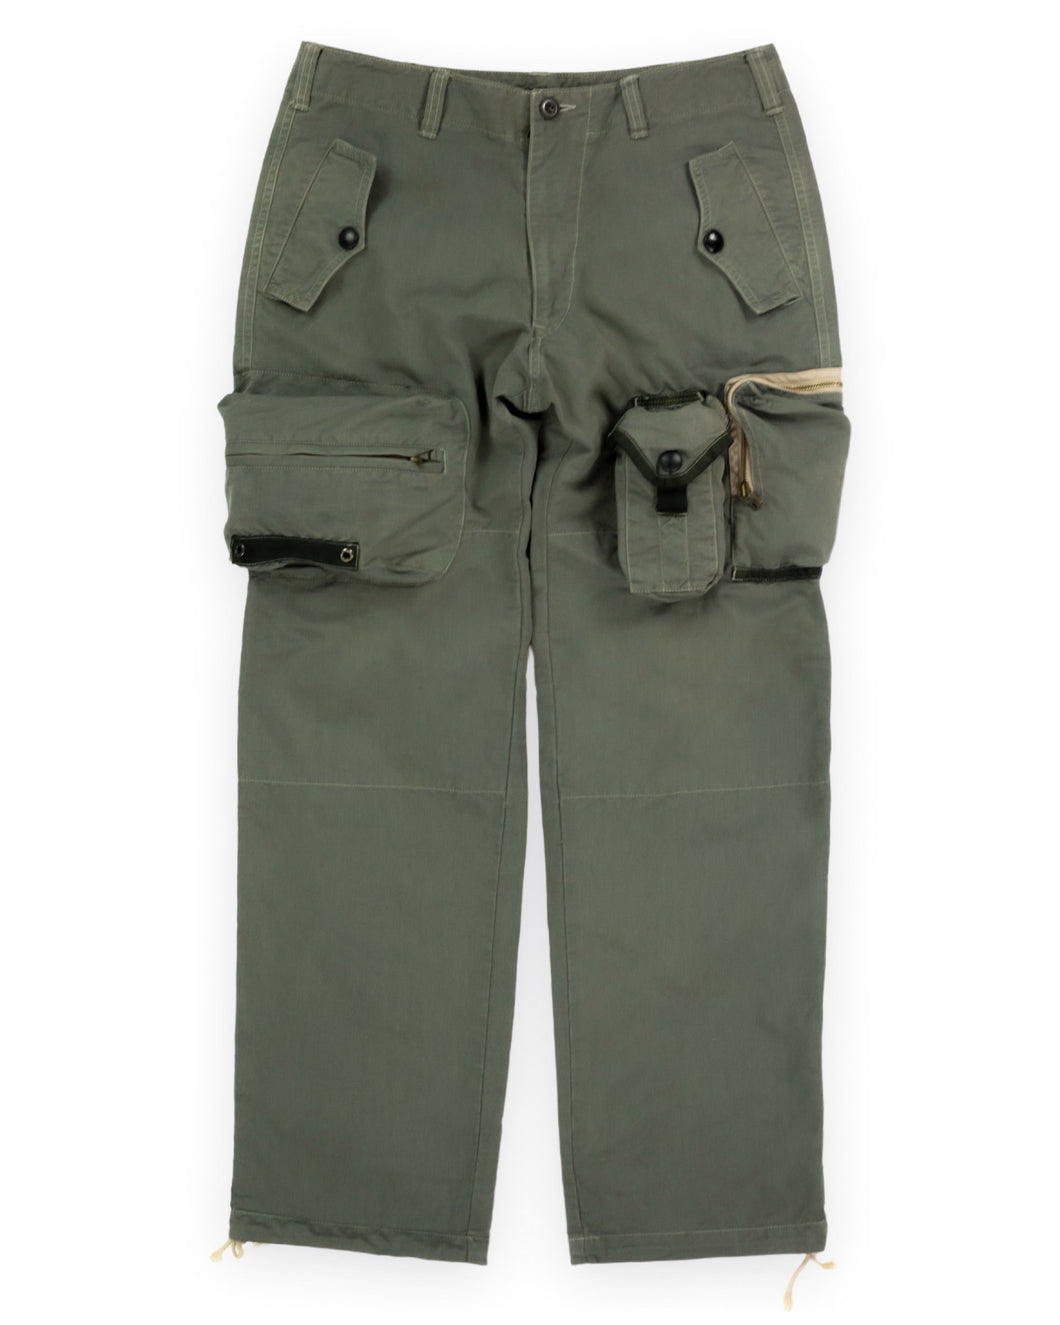 SAGE DE CRET Multi-Pocket Cargo Pants (Early 2000’s)(30-33”)